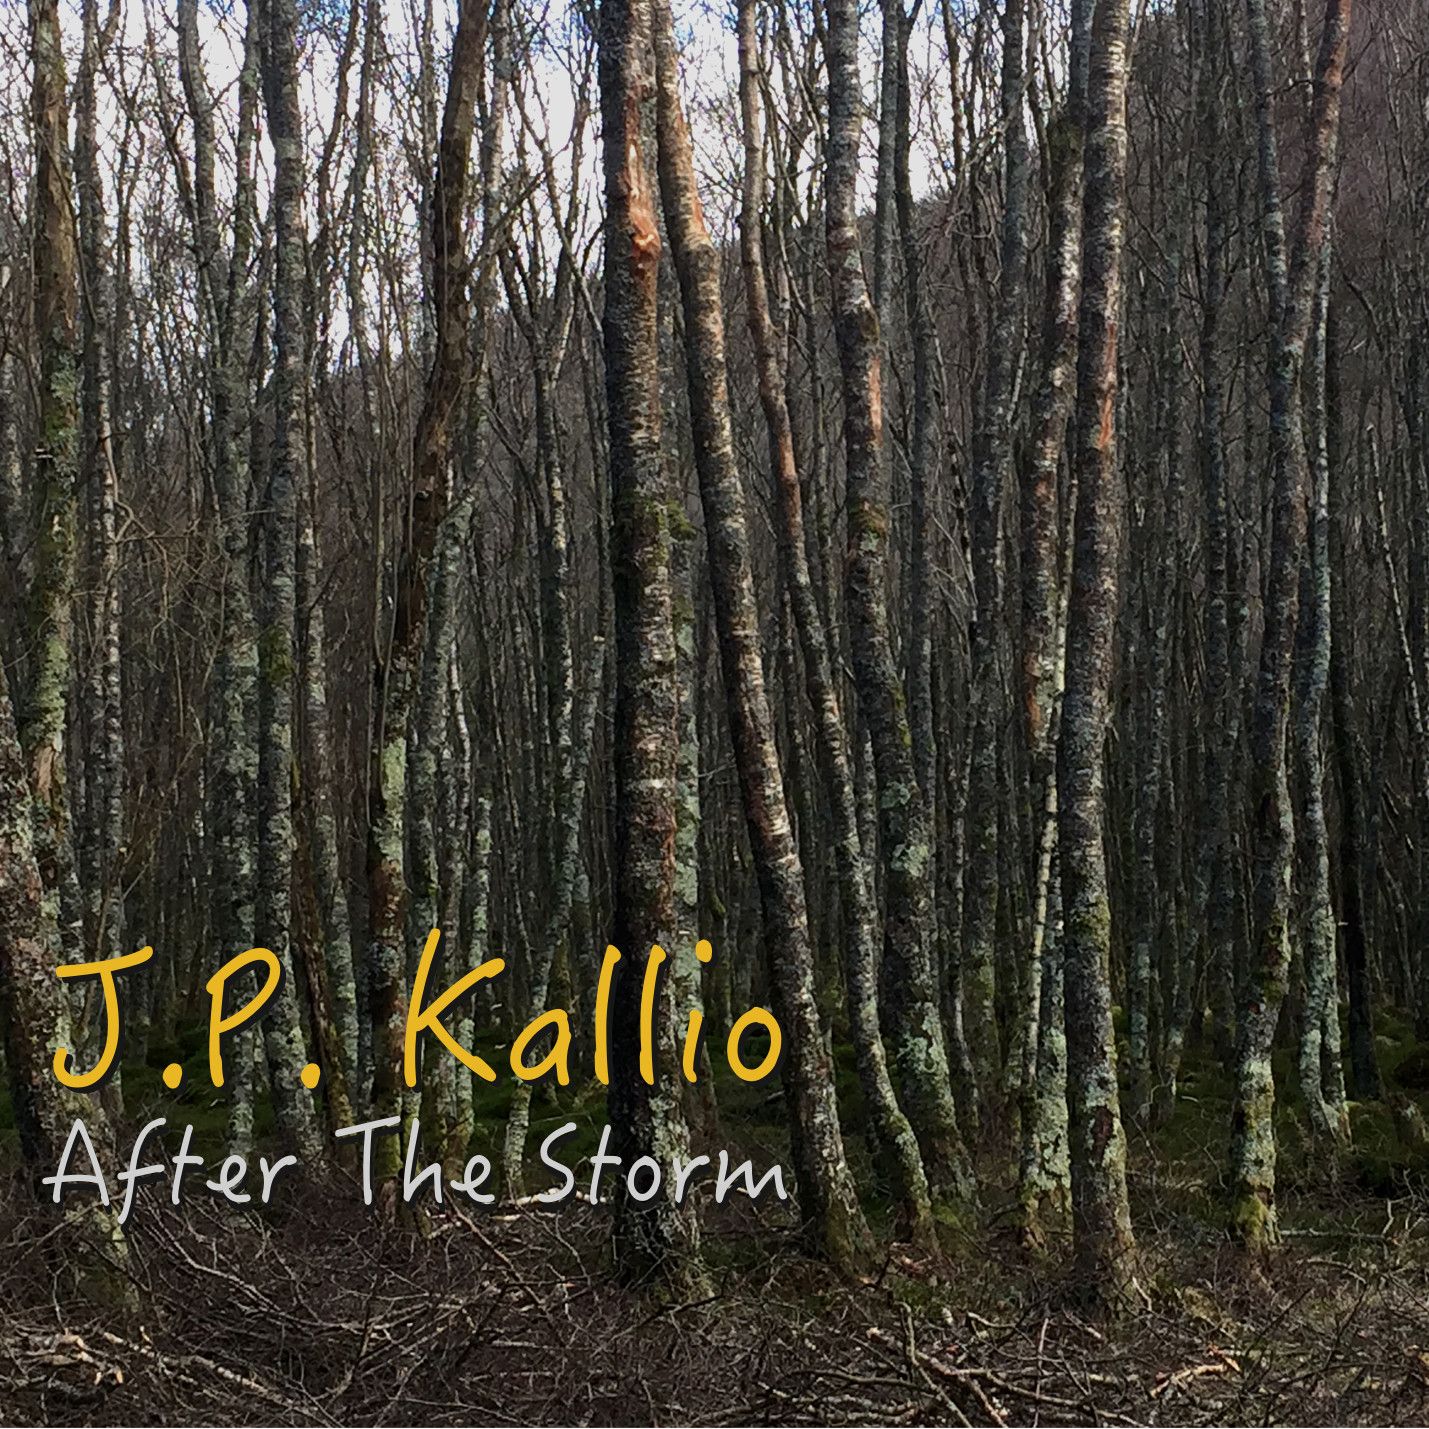 Review: J.P. Kallio "After The Storm"